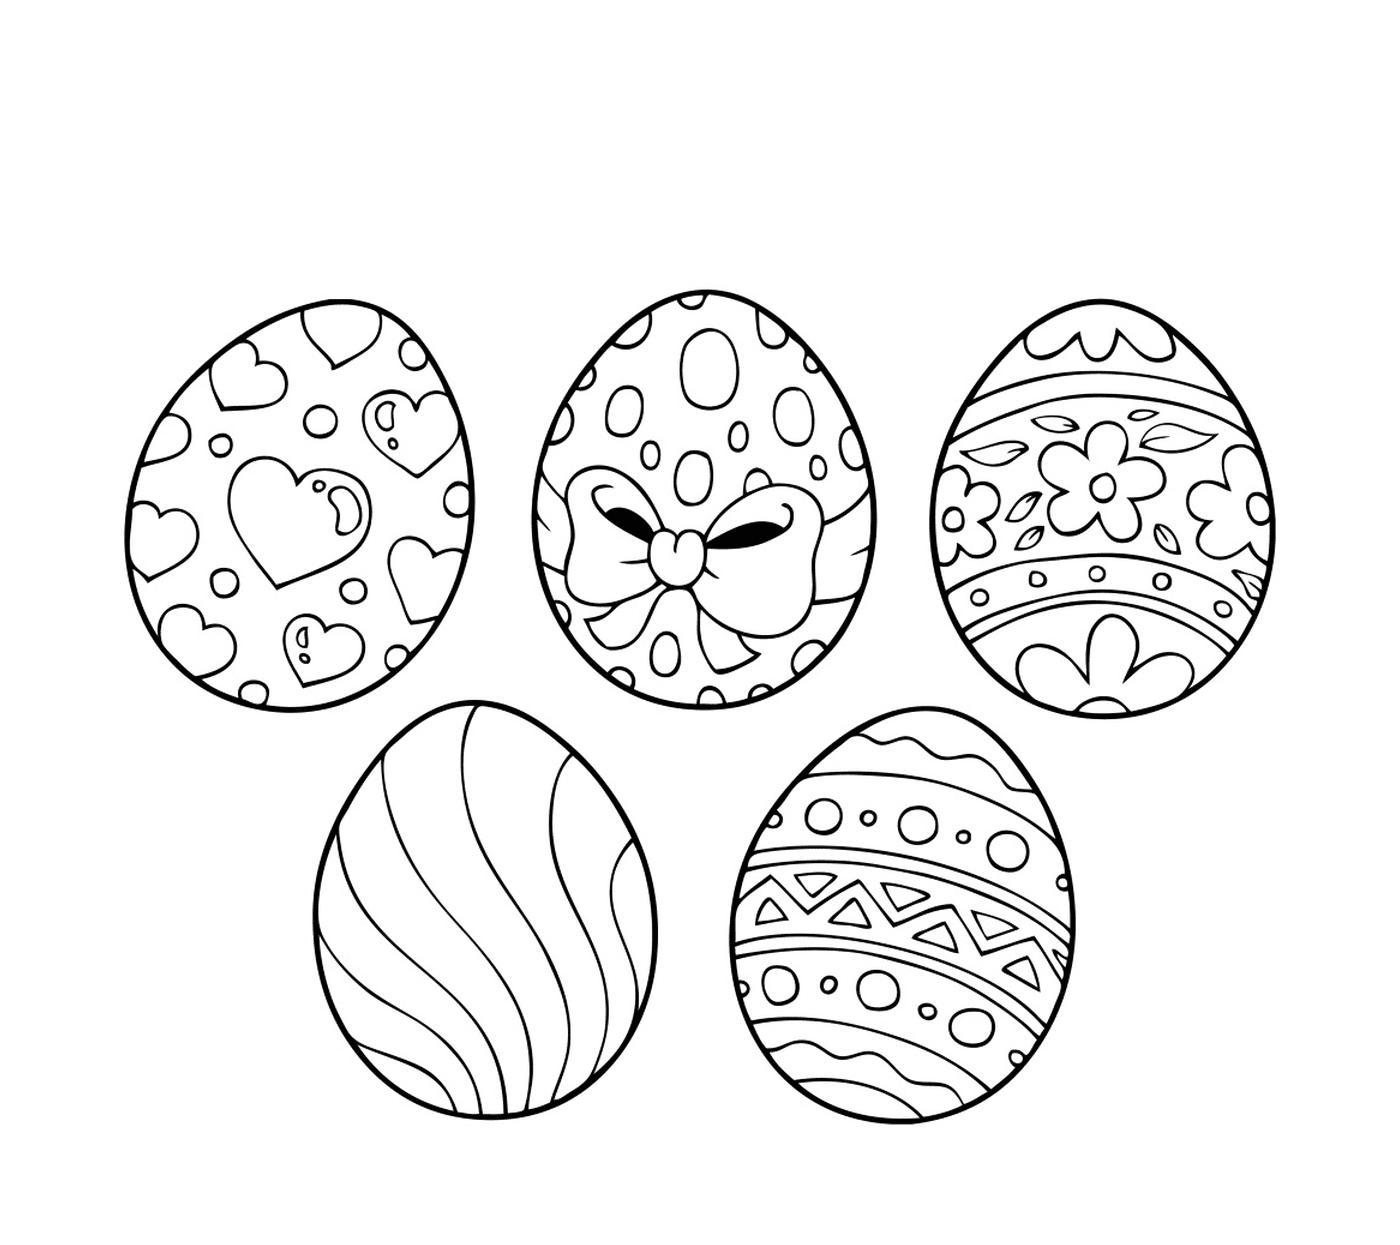  Huevos de Pascua 2017, un conjunto de huevos de Pascua decorados con diferentes patrones 